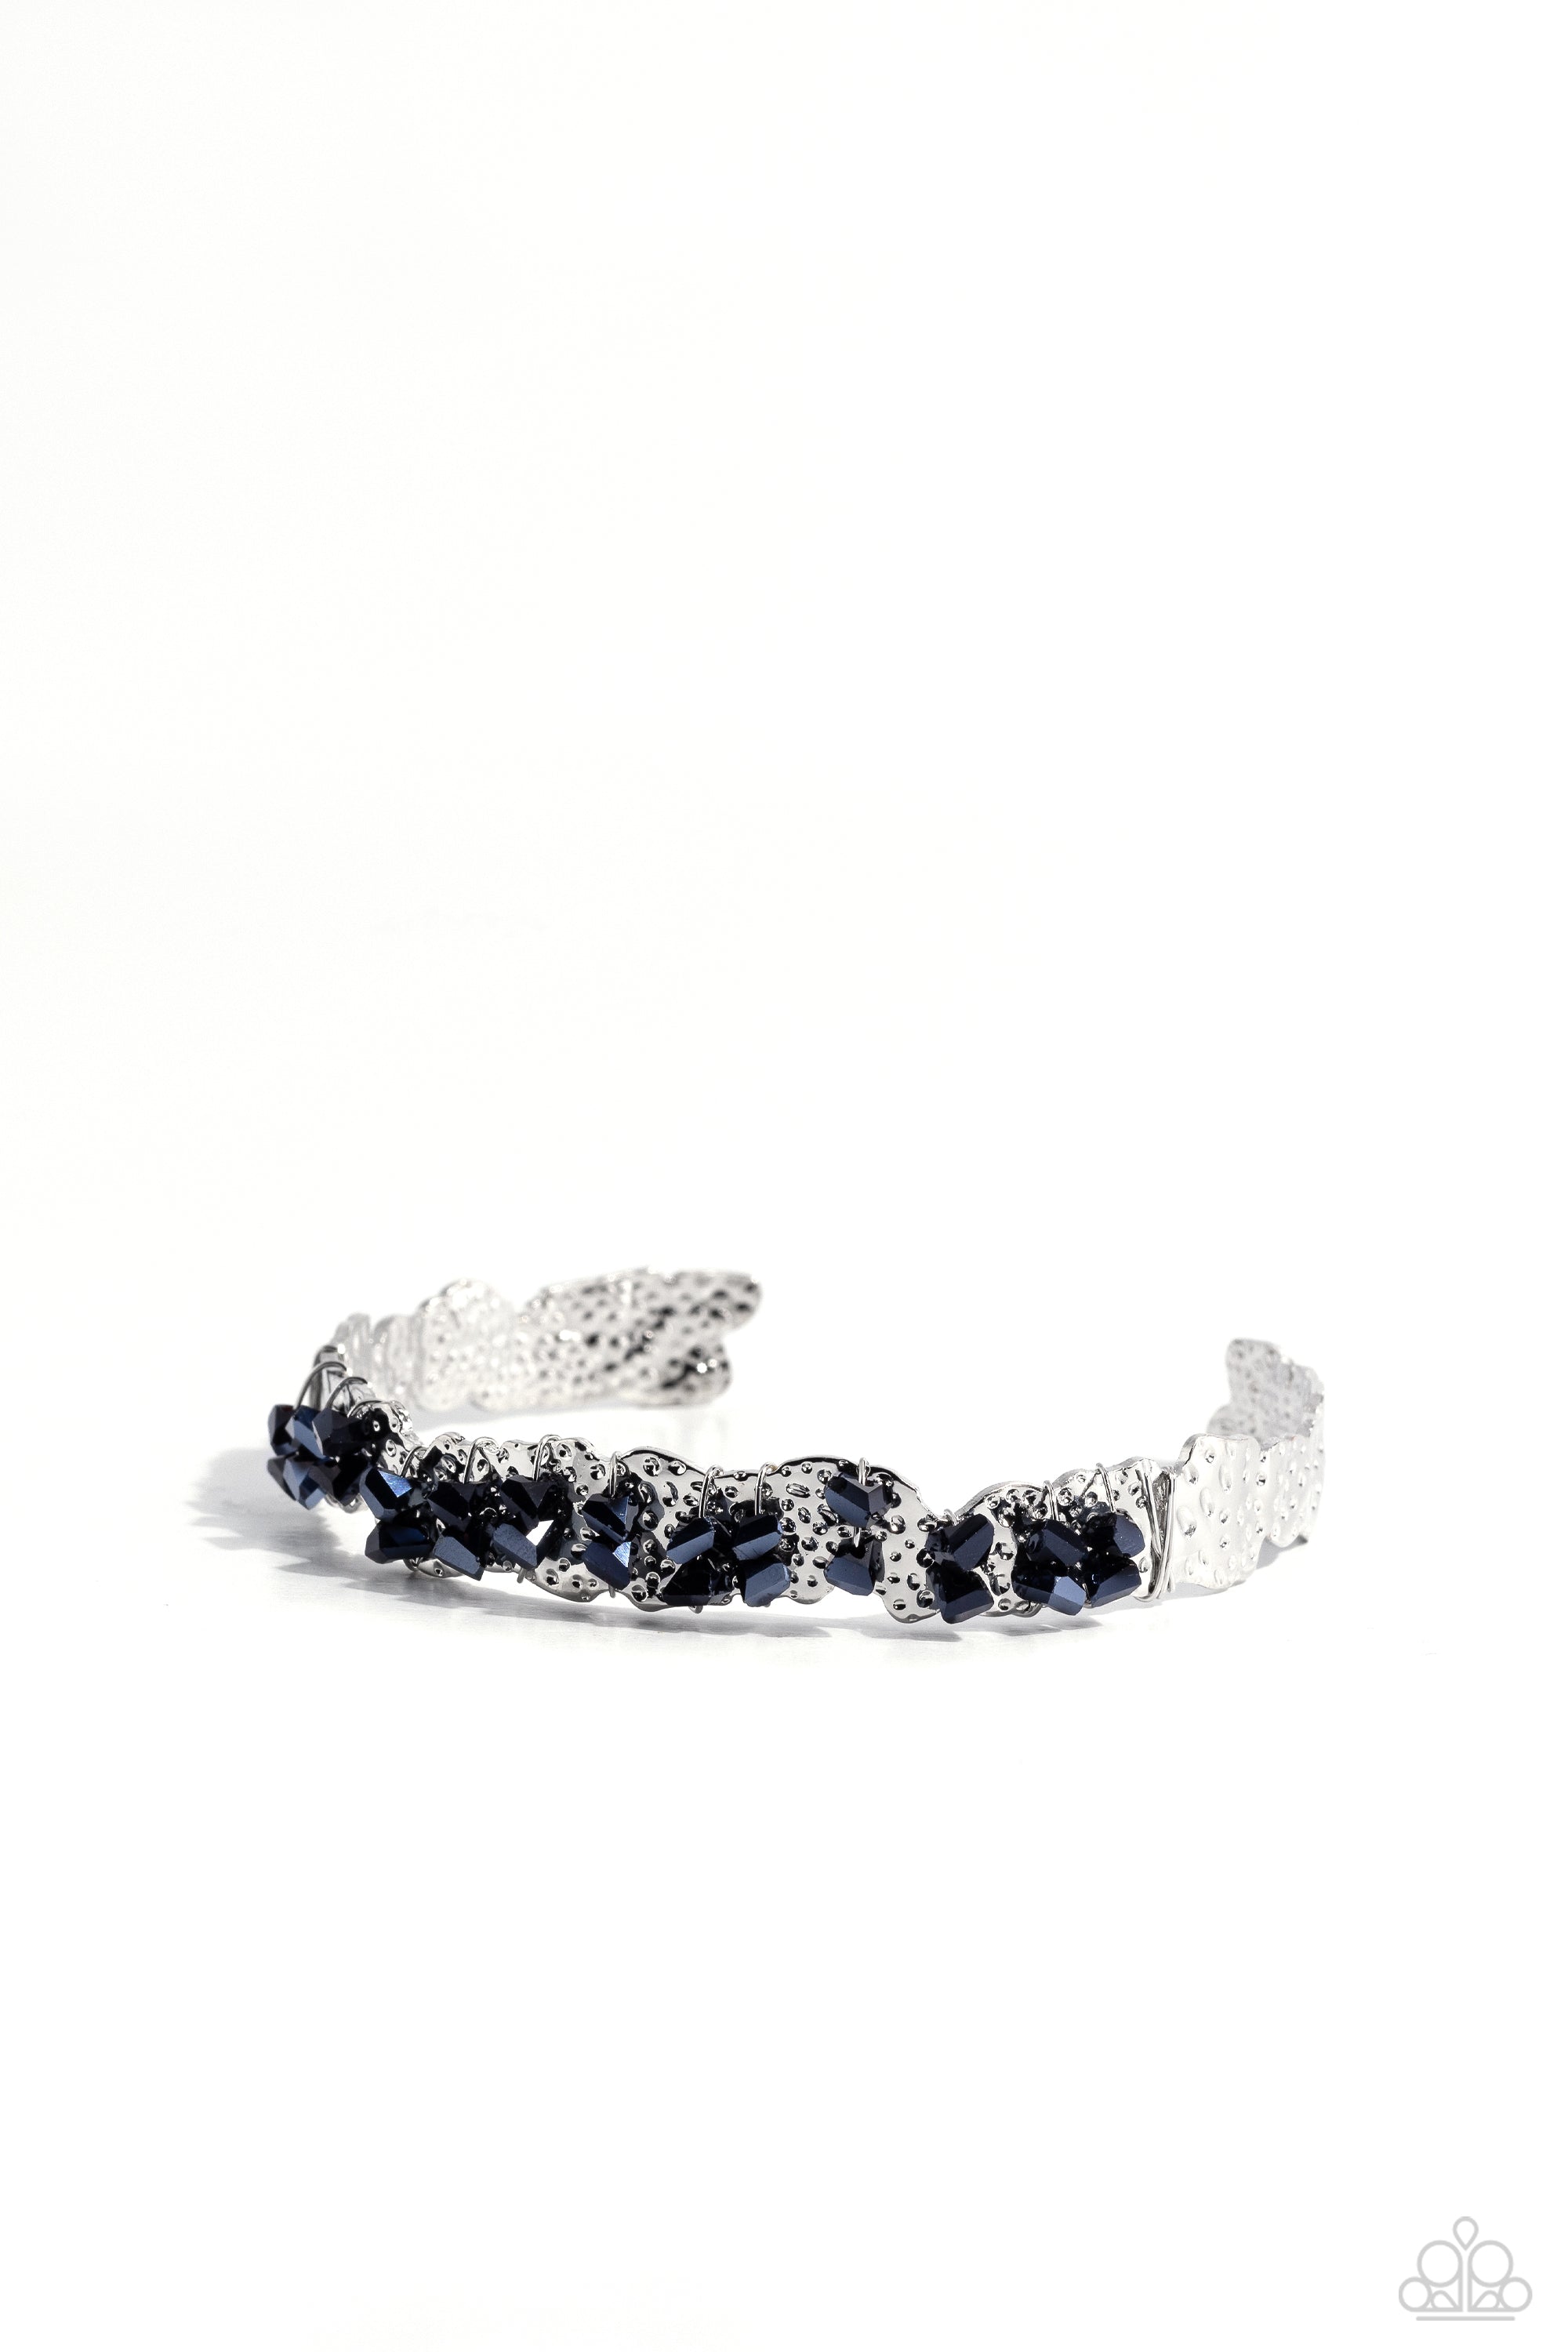 Enticingly Icy Blue Rhinestone Cuff Bracelet - Paparazzi Accessories- lightbox - CarasShop.com - $5 Jewelry by Cara Jewels